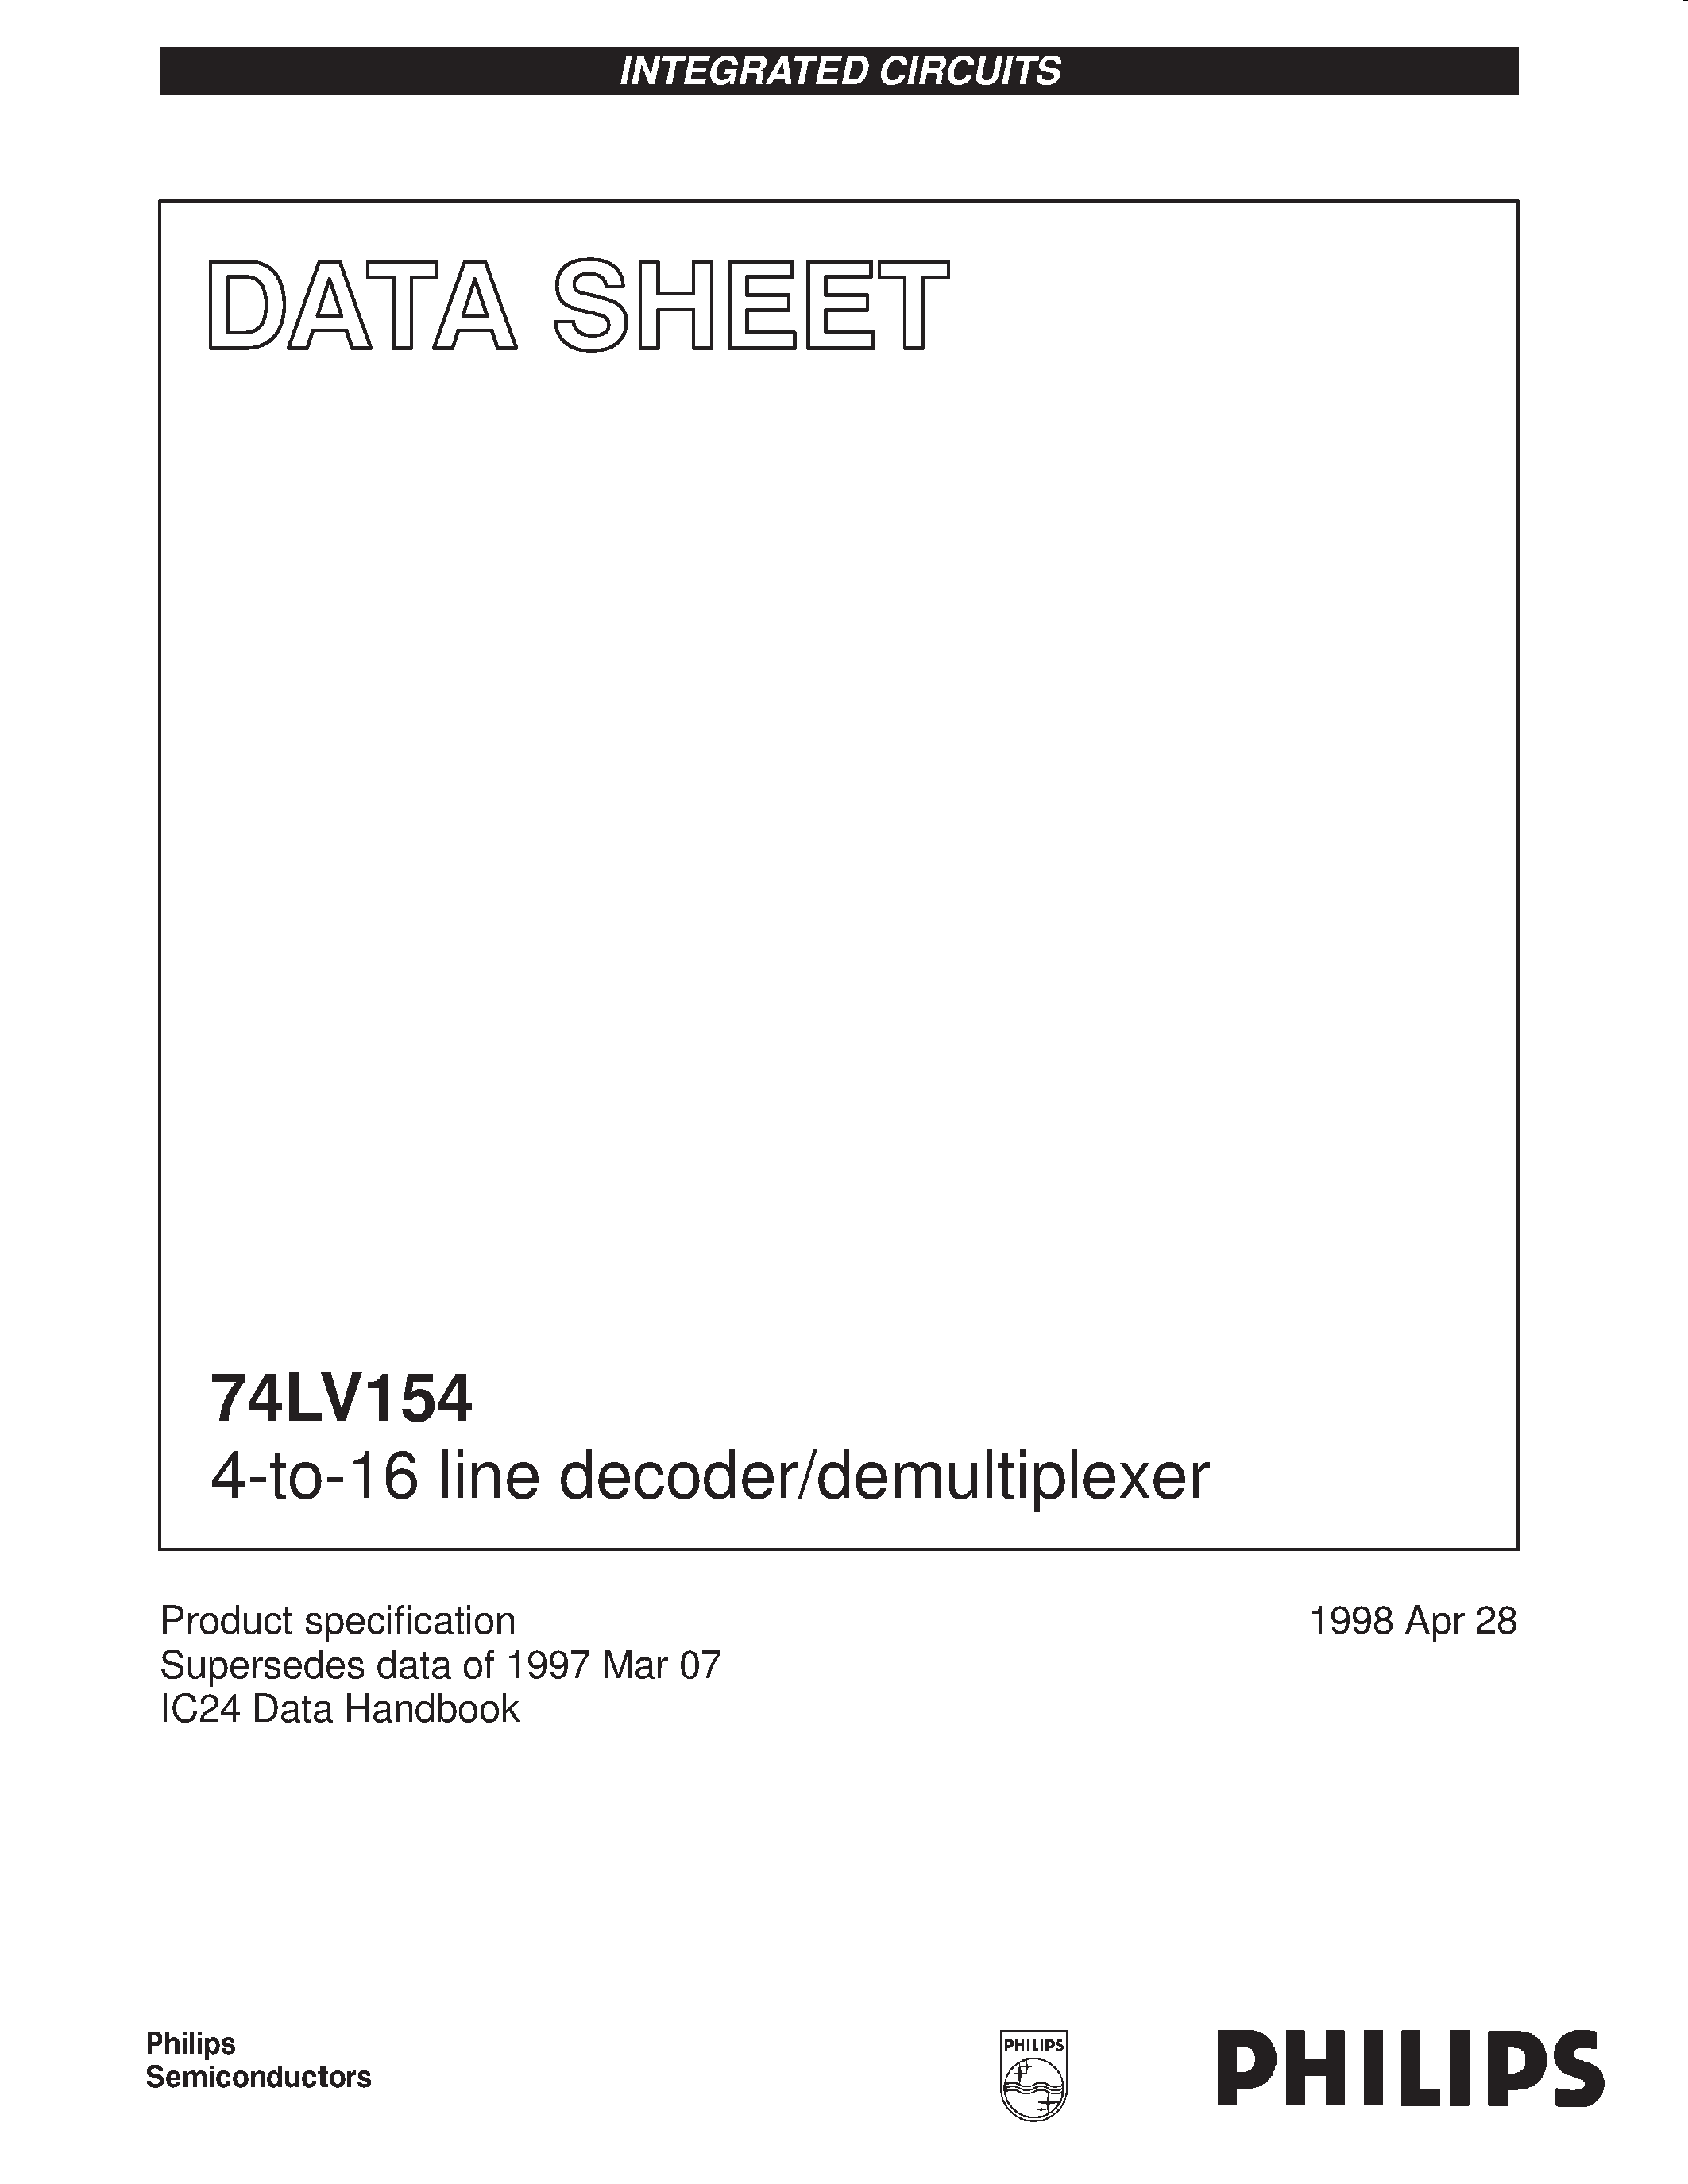 Даташит 74LV154 - 4-to-16 line decoder/demultiplexer страница 1